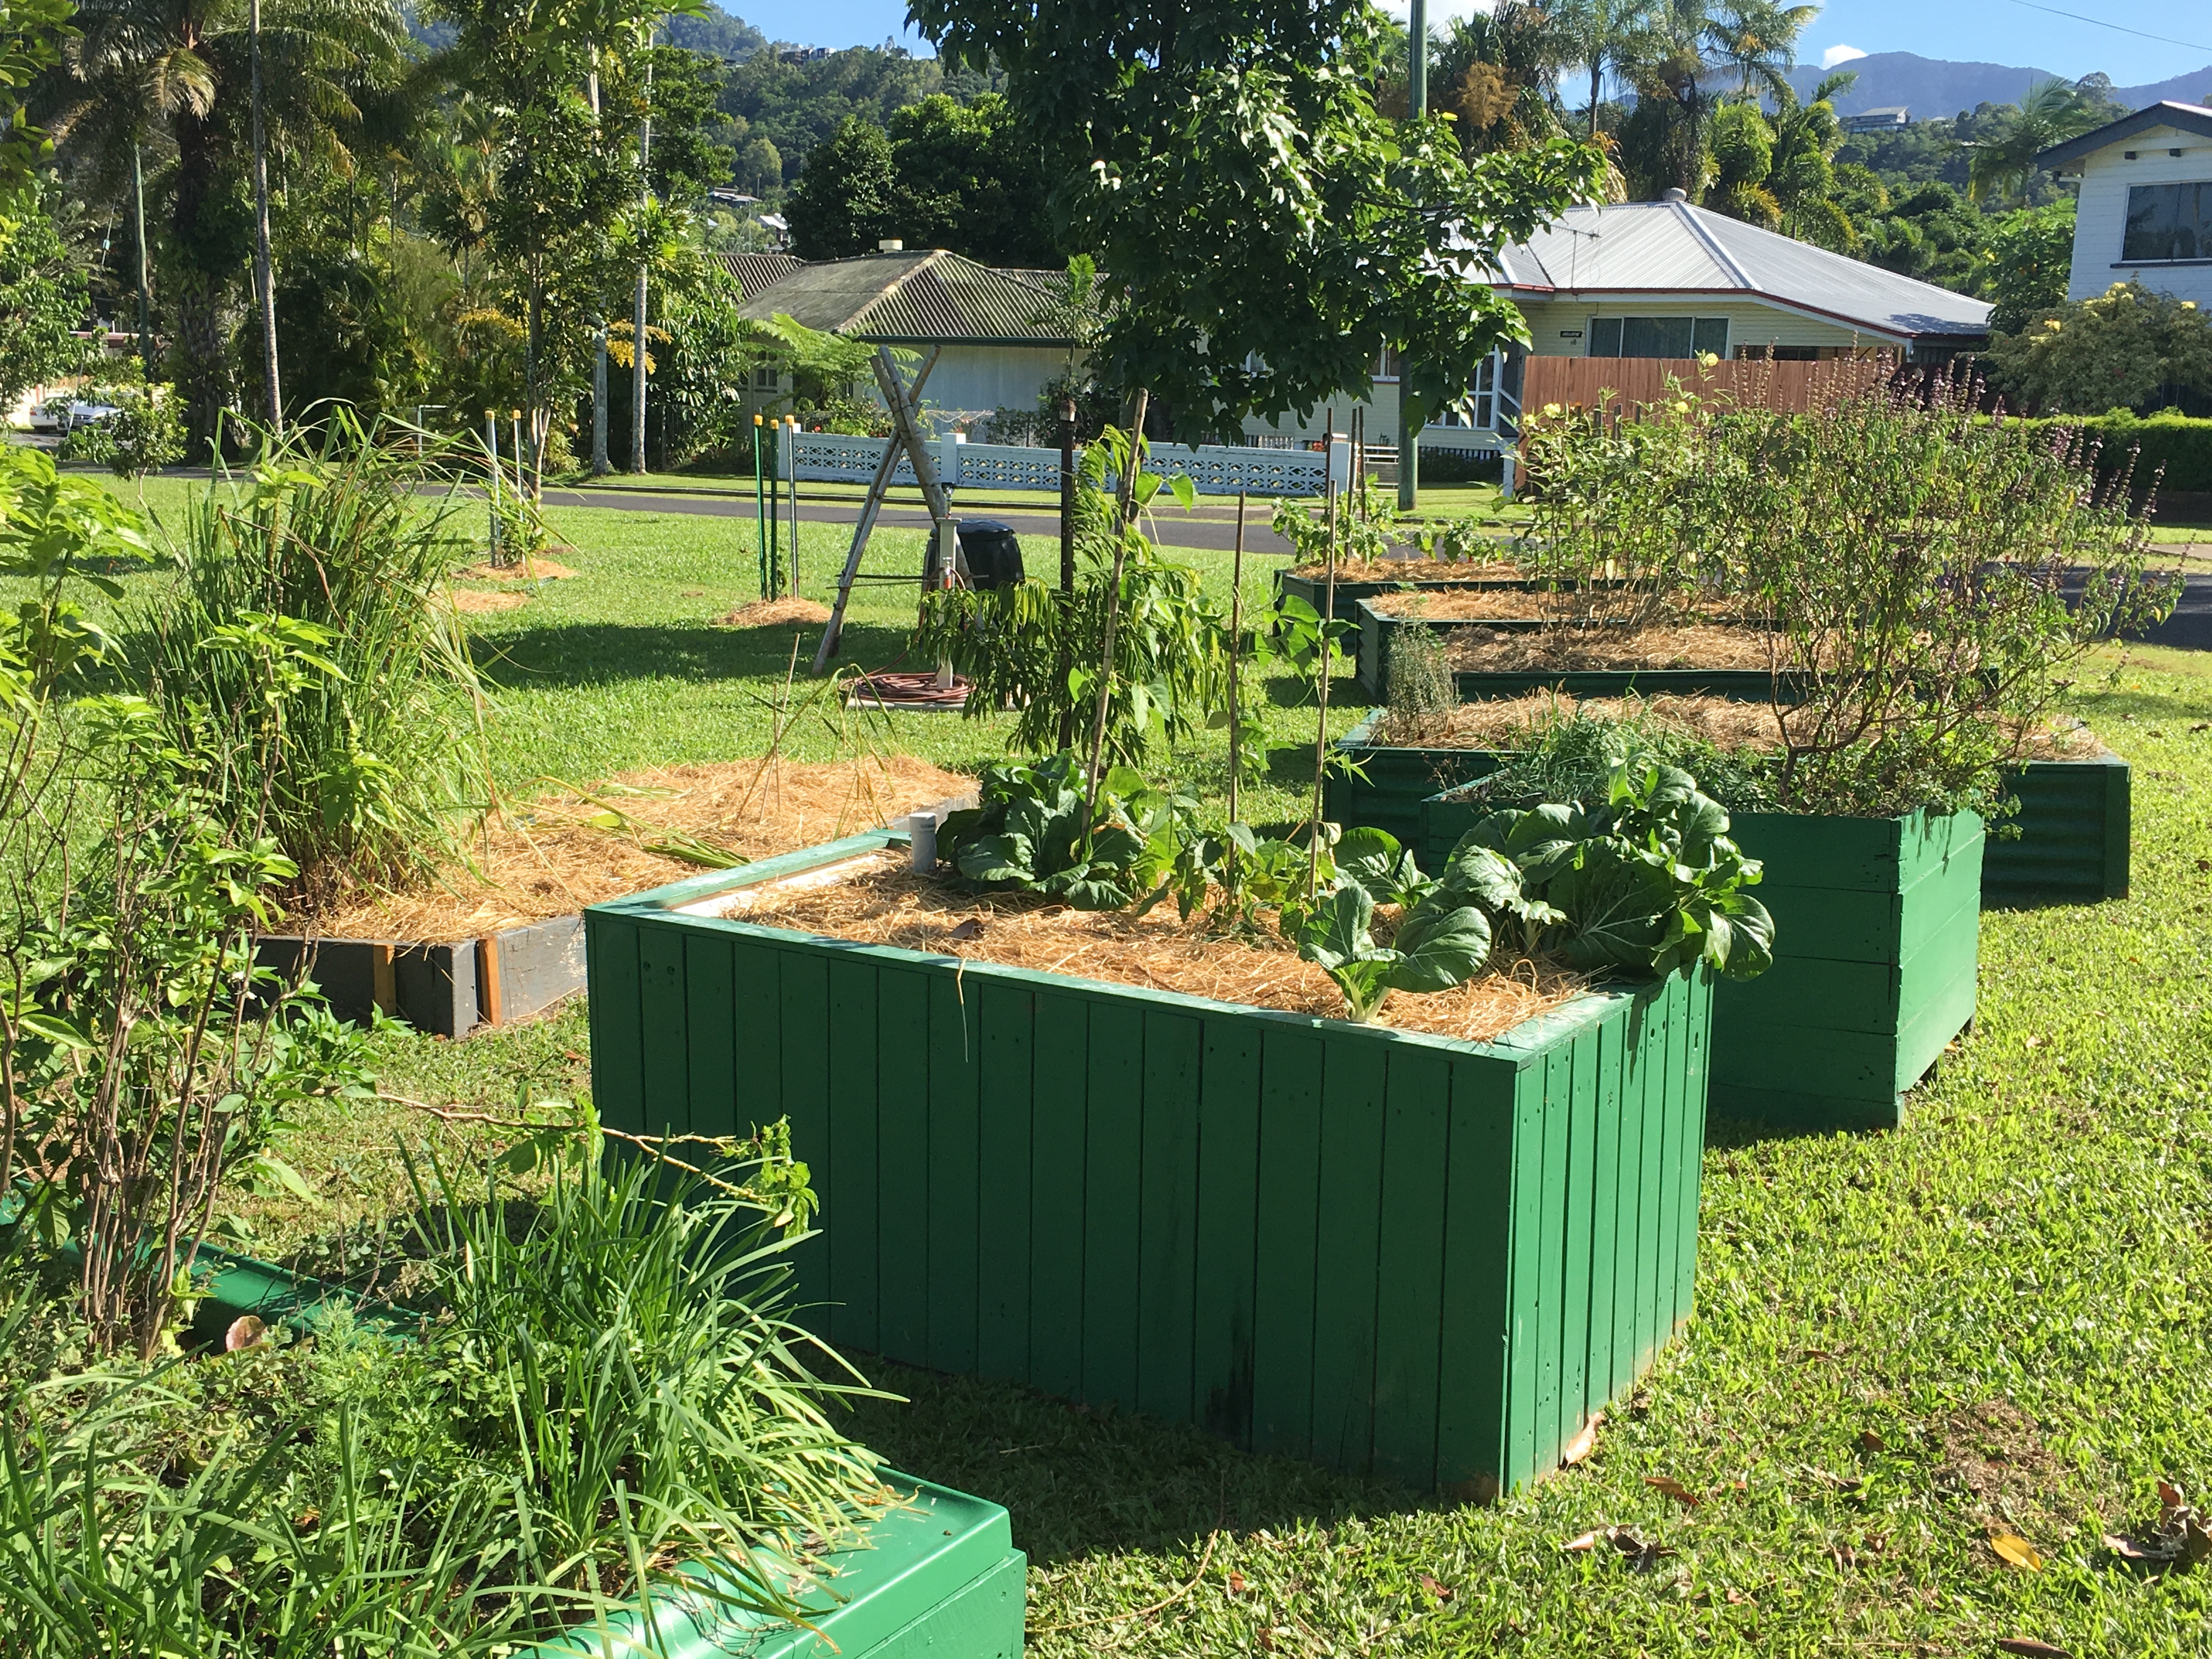 Established pocket garden wicking beds with various vegetables growing